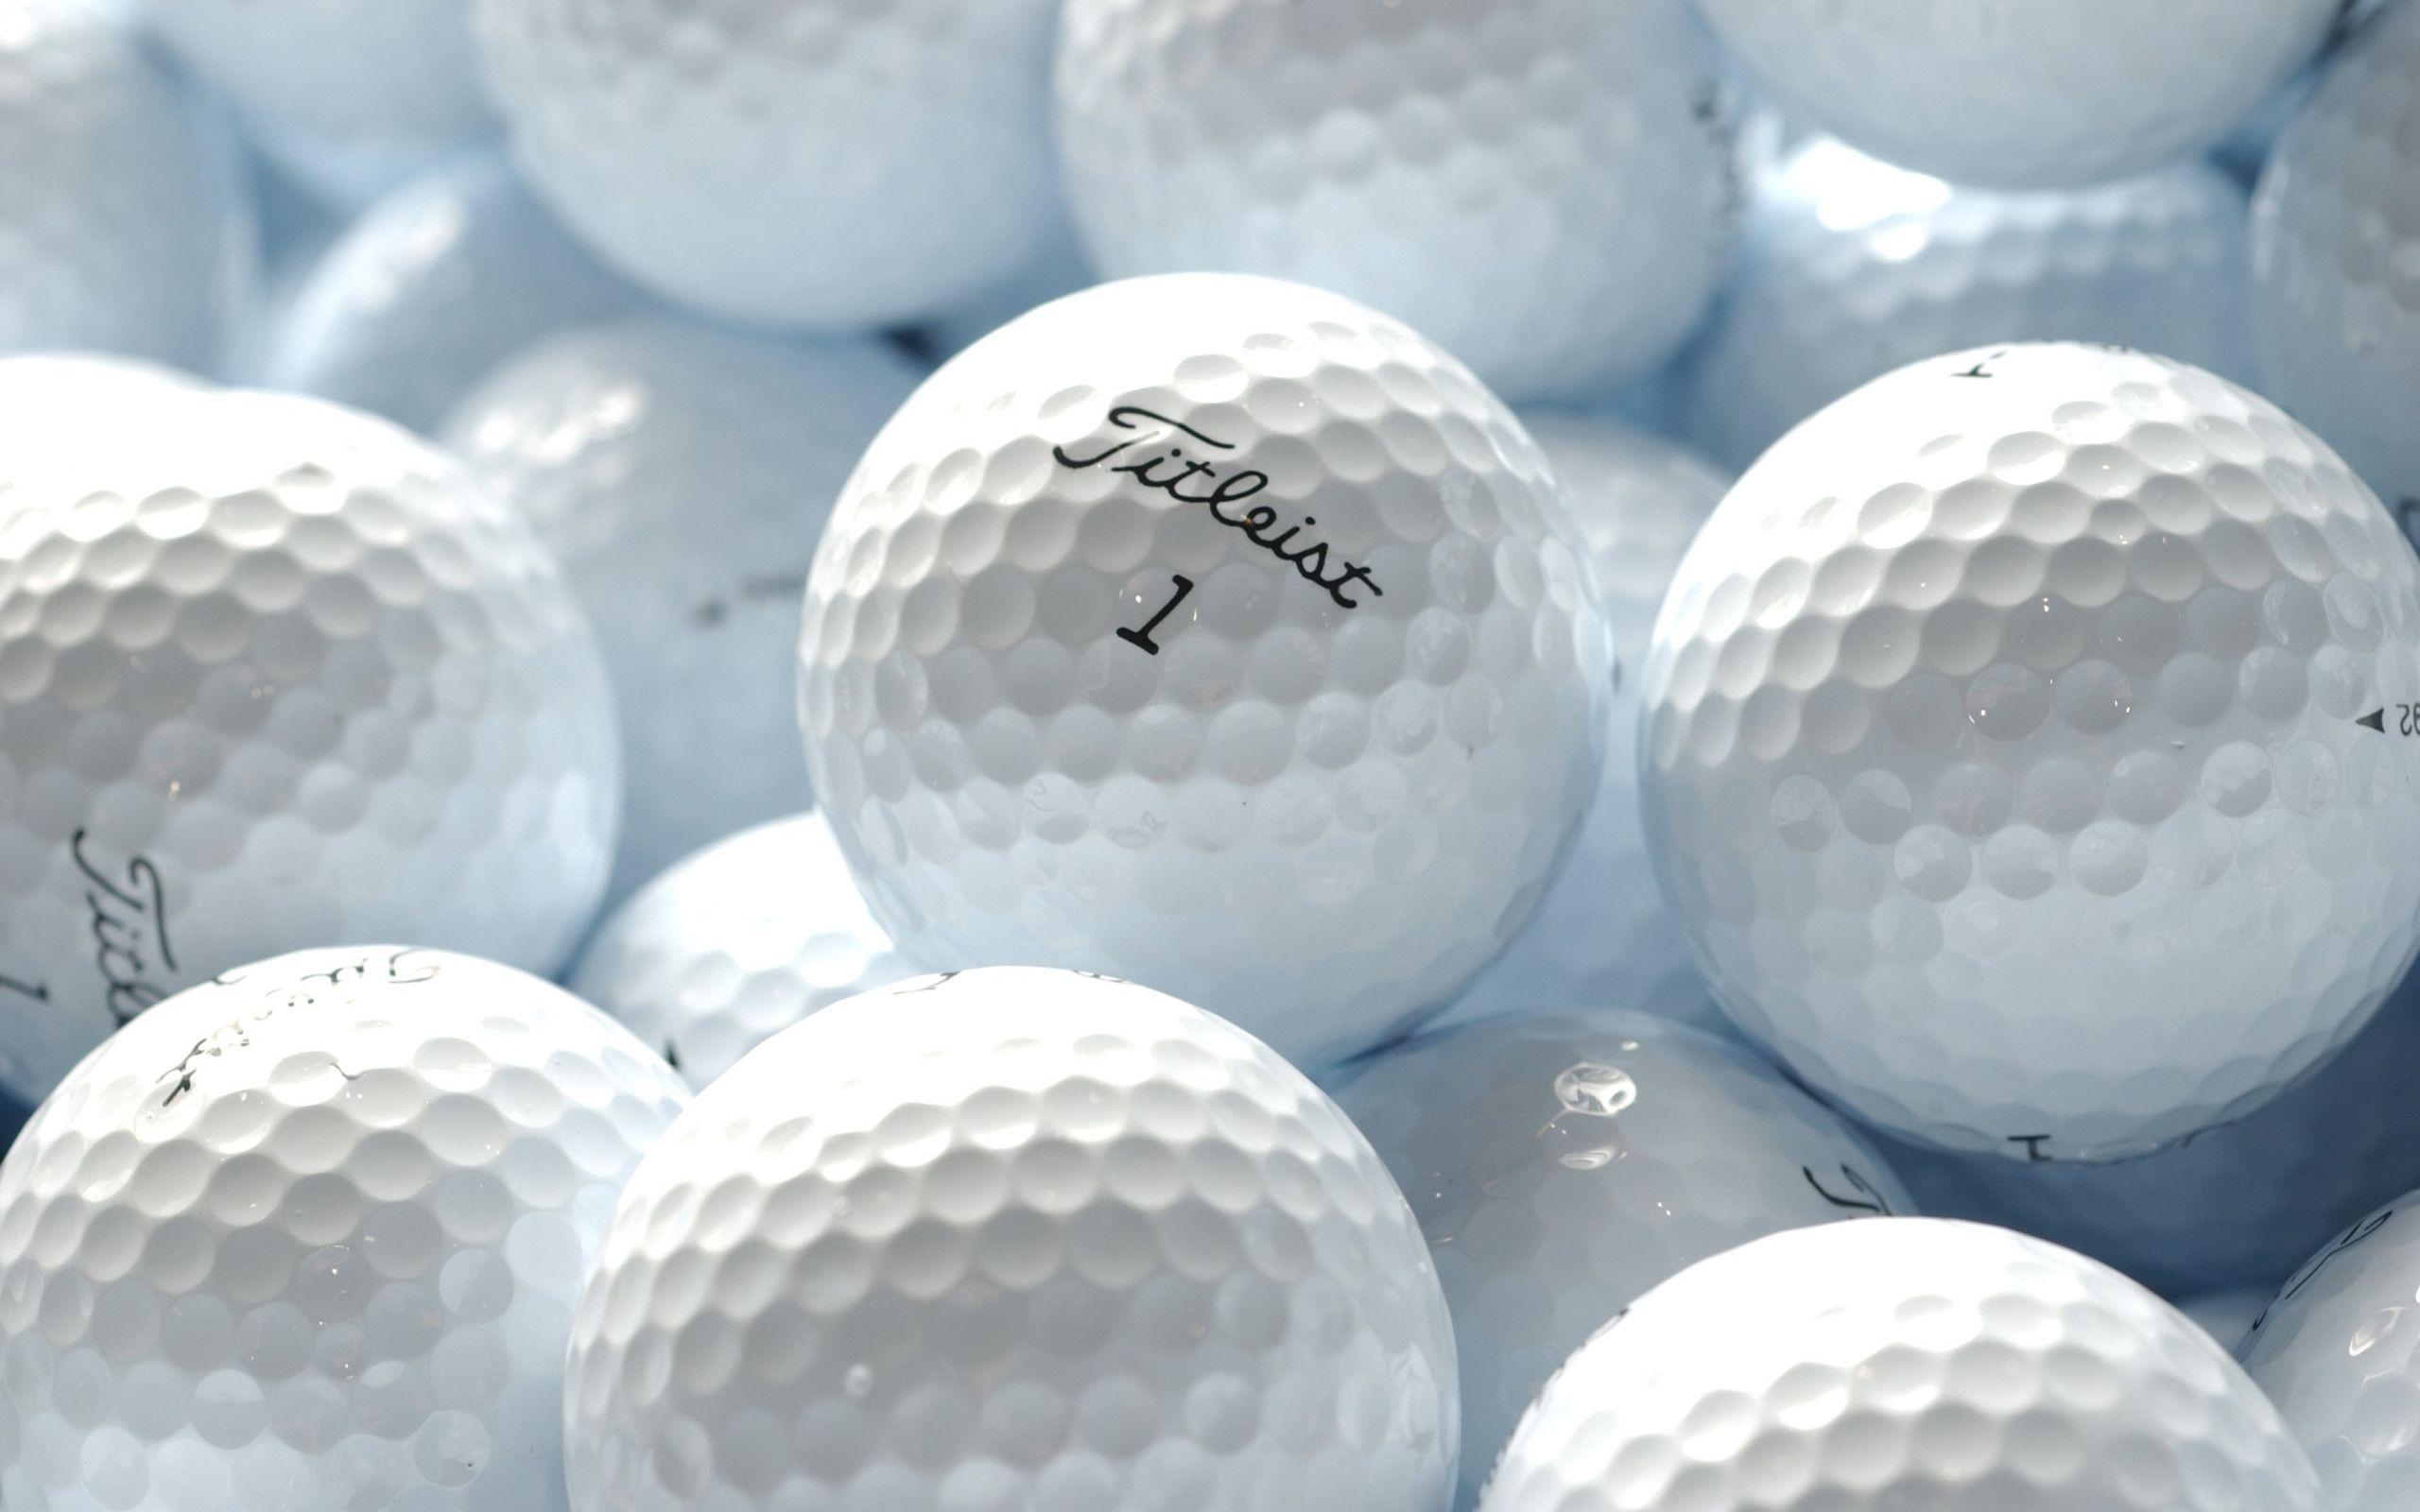 Balls for golf Desktop Wallpapers FREE on Latoro